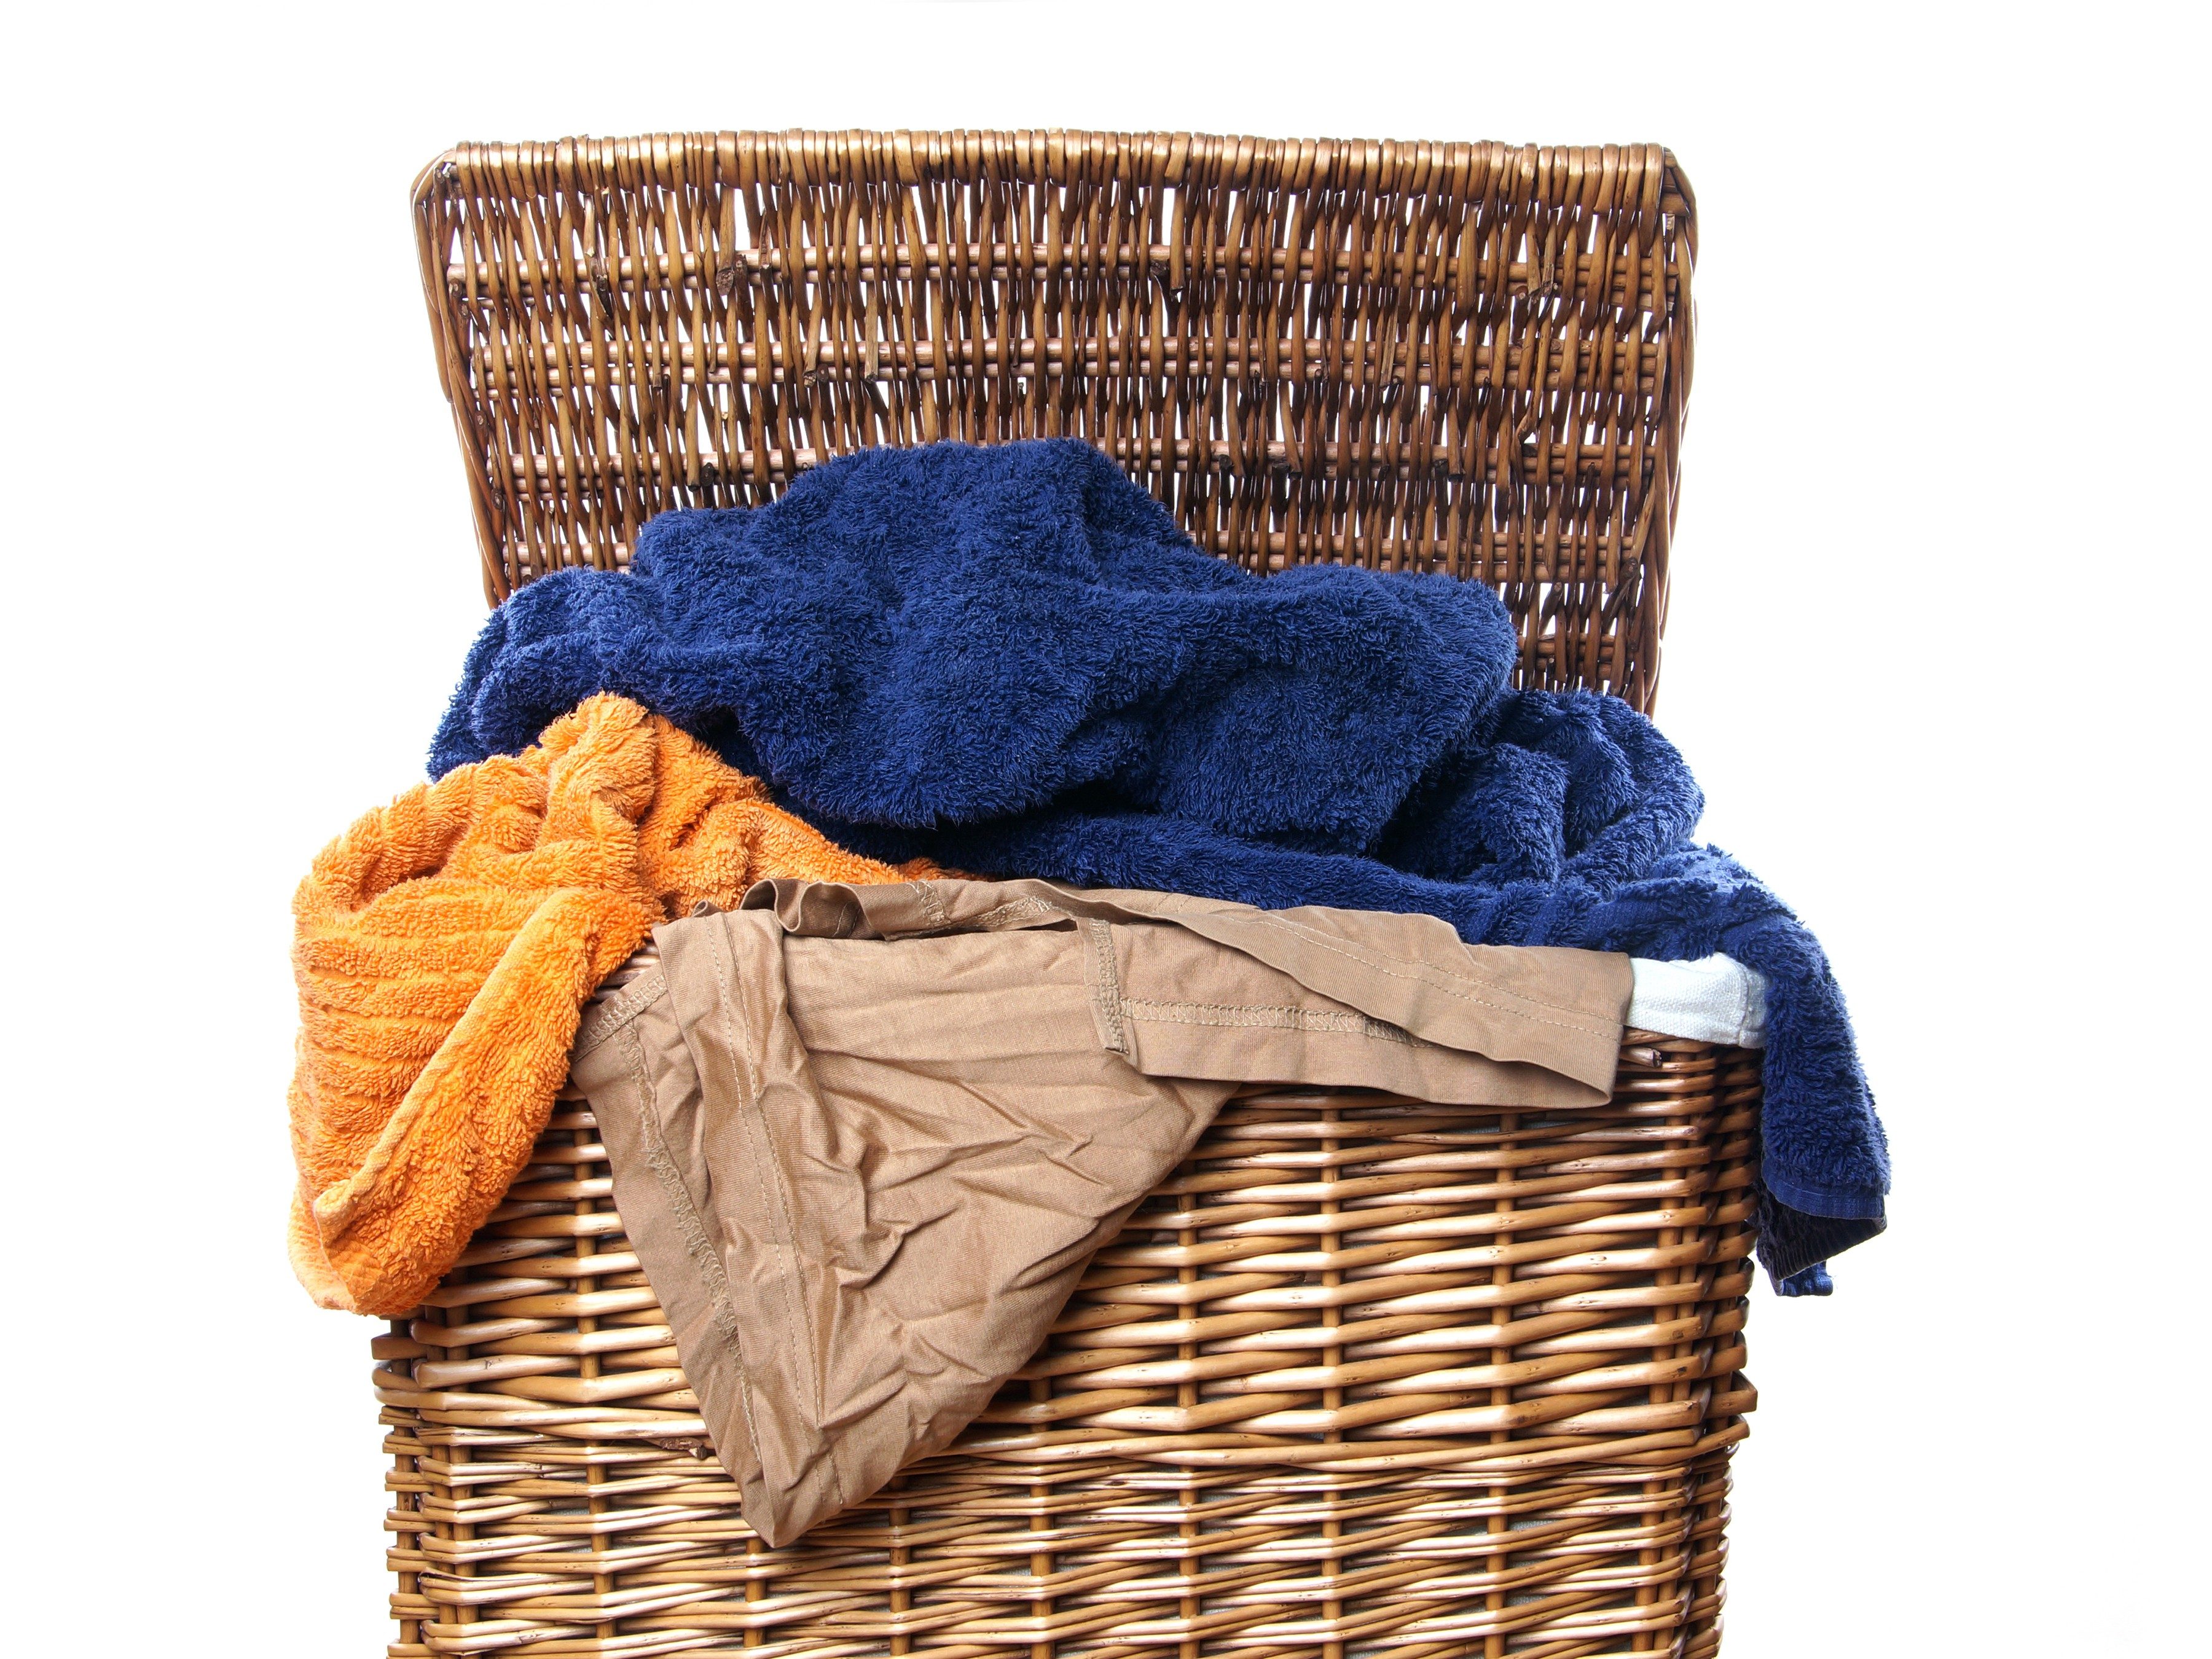 6. Freshen a Laundry Hamper